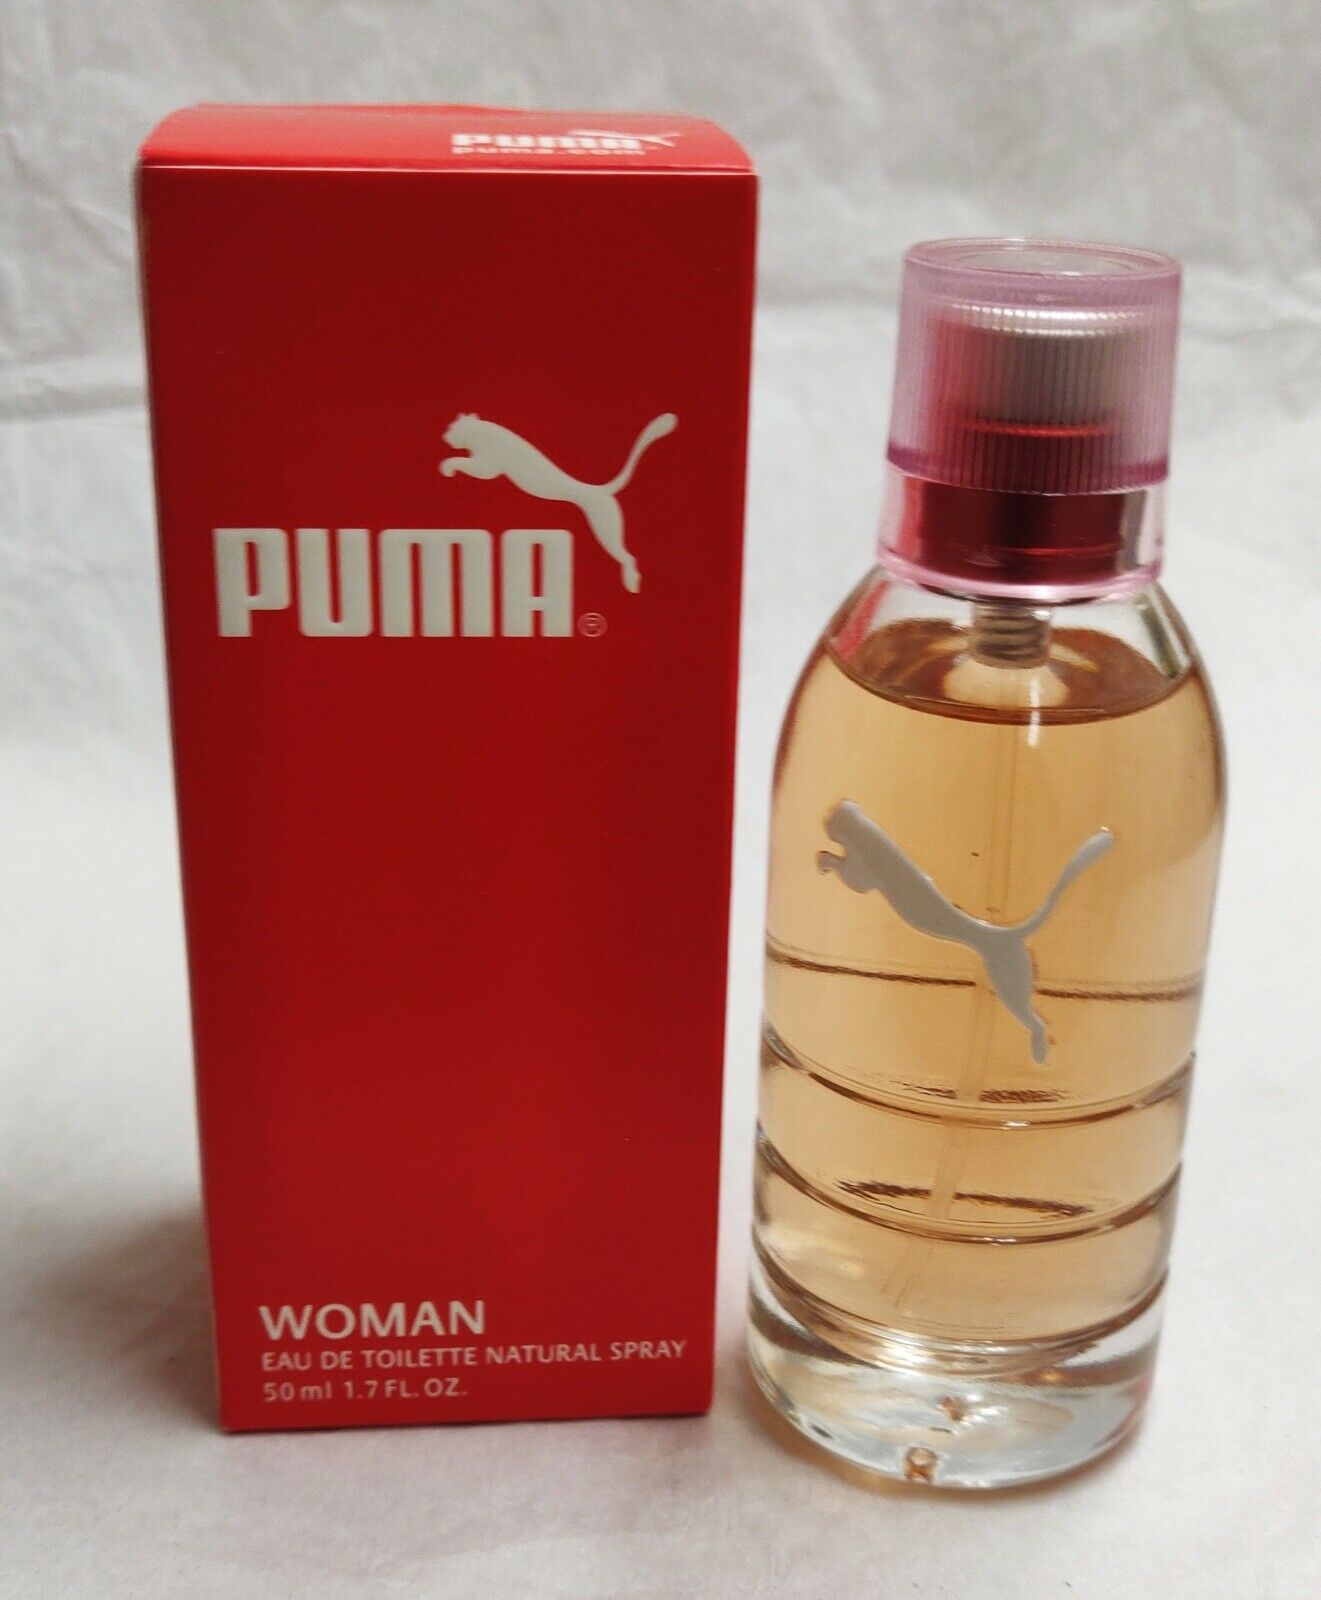 Puma by Puma 50 ml Eau De Toilette Spray for Women